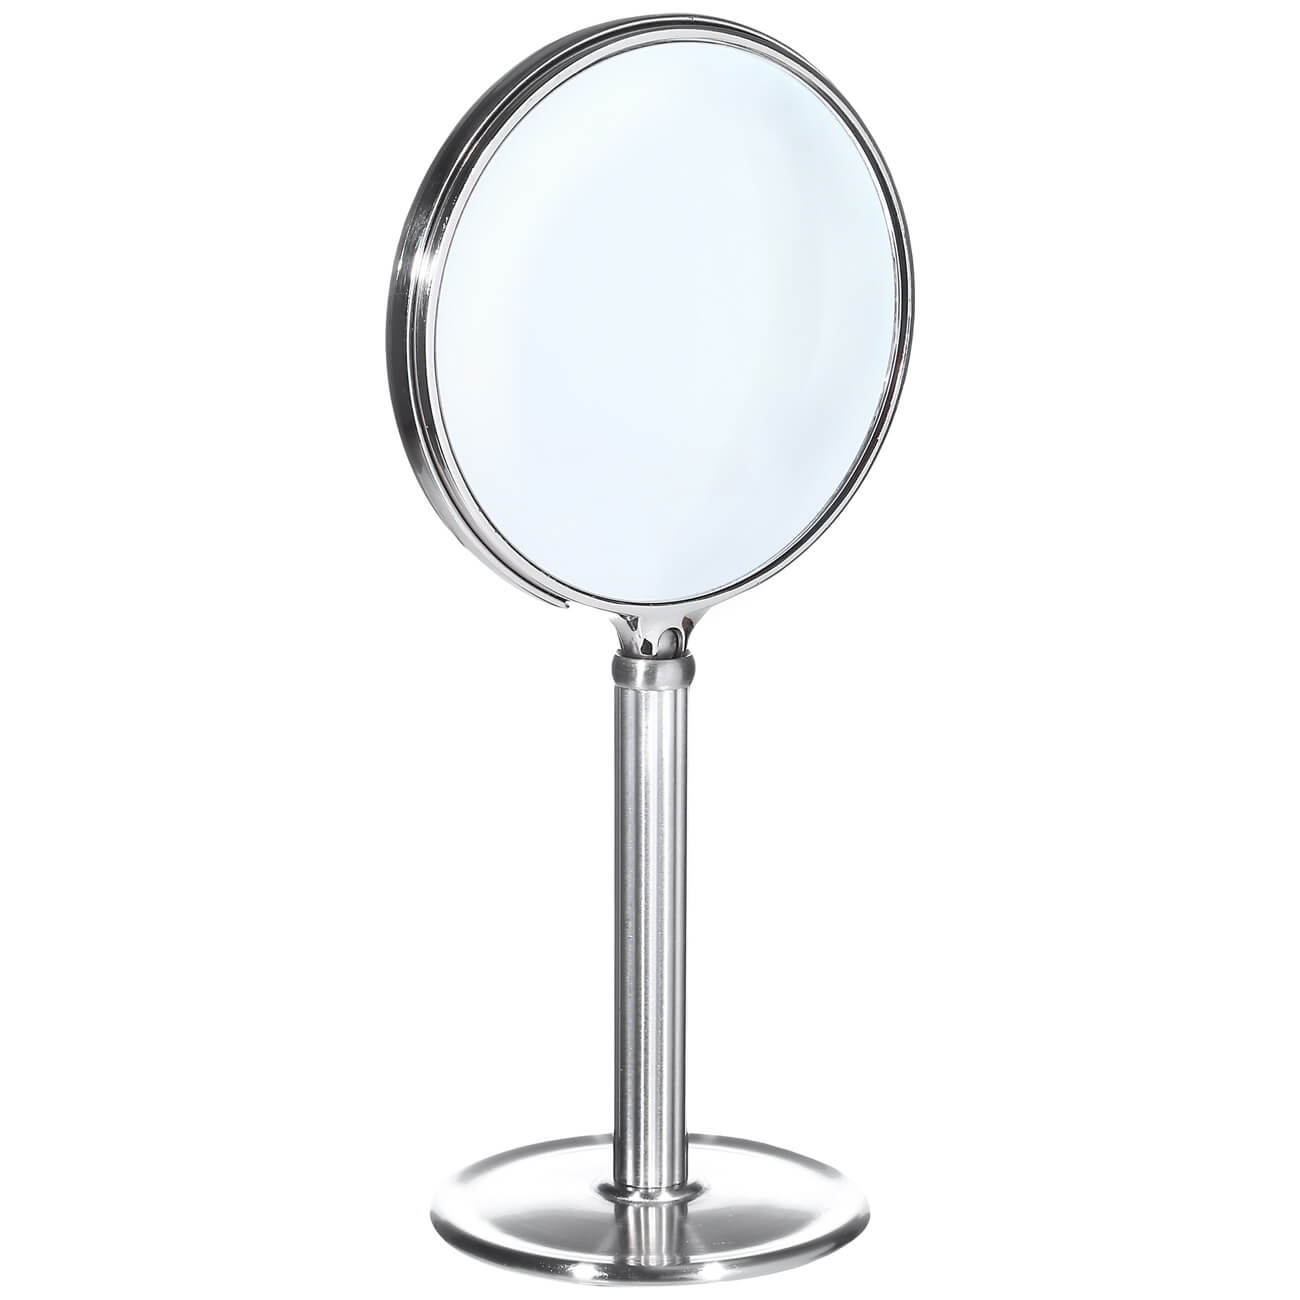 Kuchenland Зеркало настольное, 17 см, двустороннее, на ножке, металл, круглое, Fantastic зеркало косметическое настольное swensa двустороннее 17 см золотой